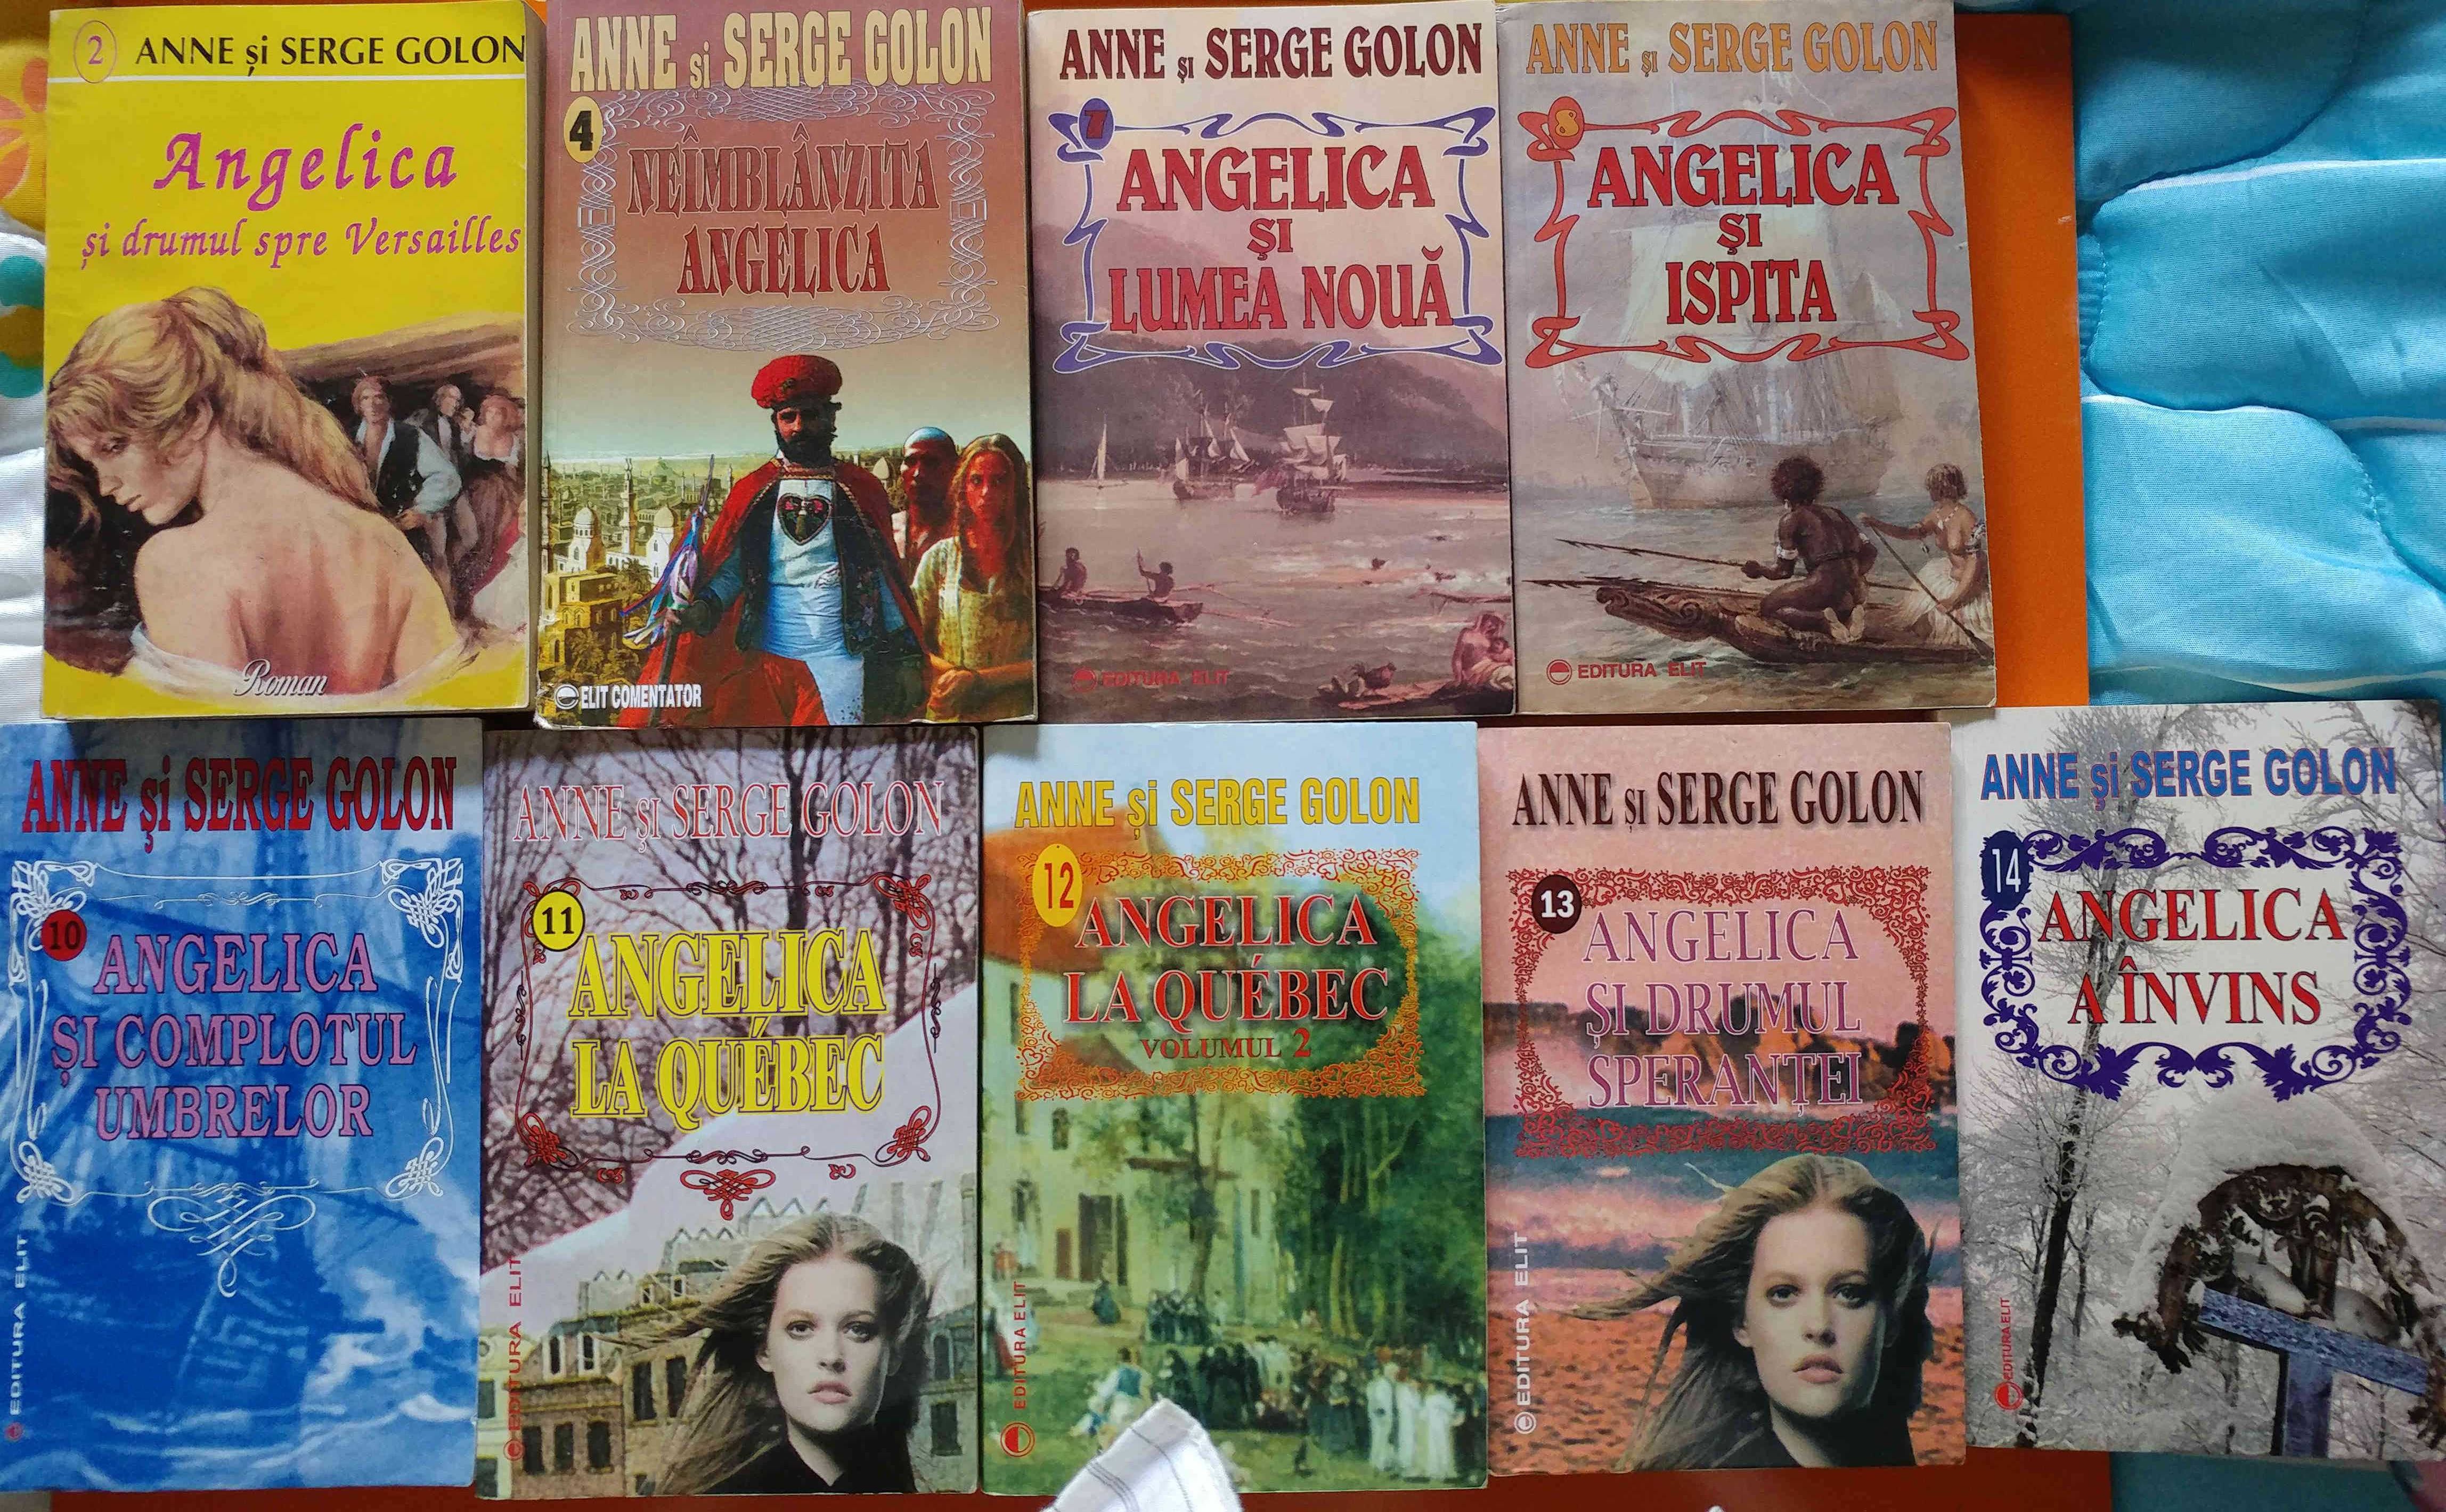 Volume din seria Angelica, marchiza ingerilor de Anne si Serge Golon